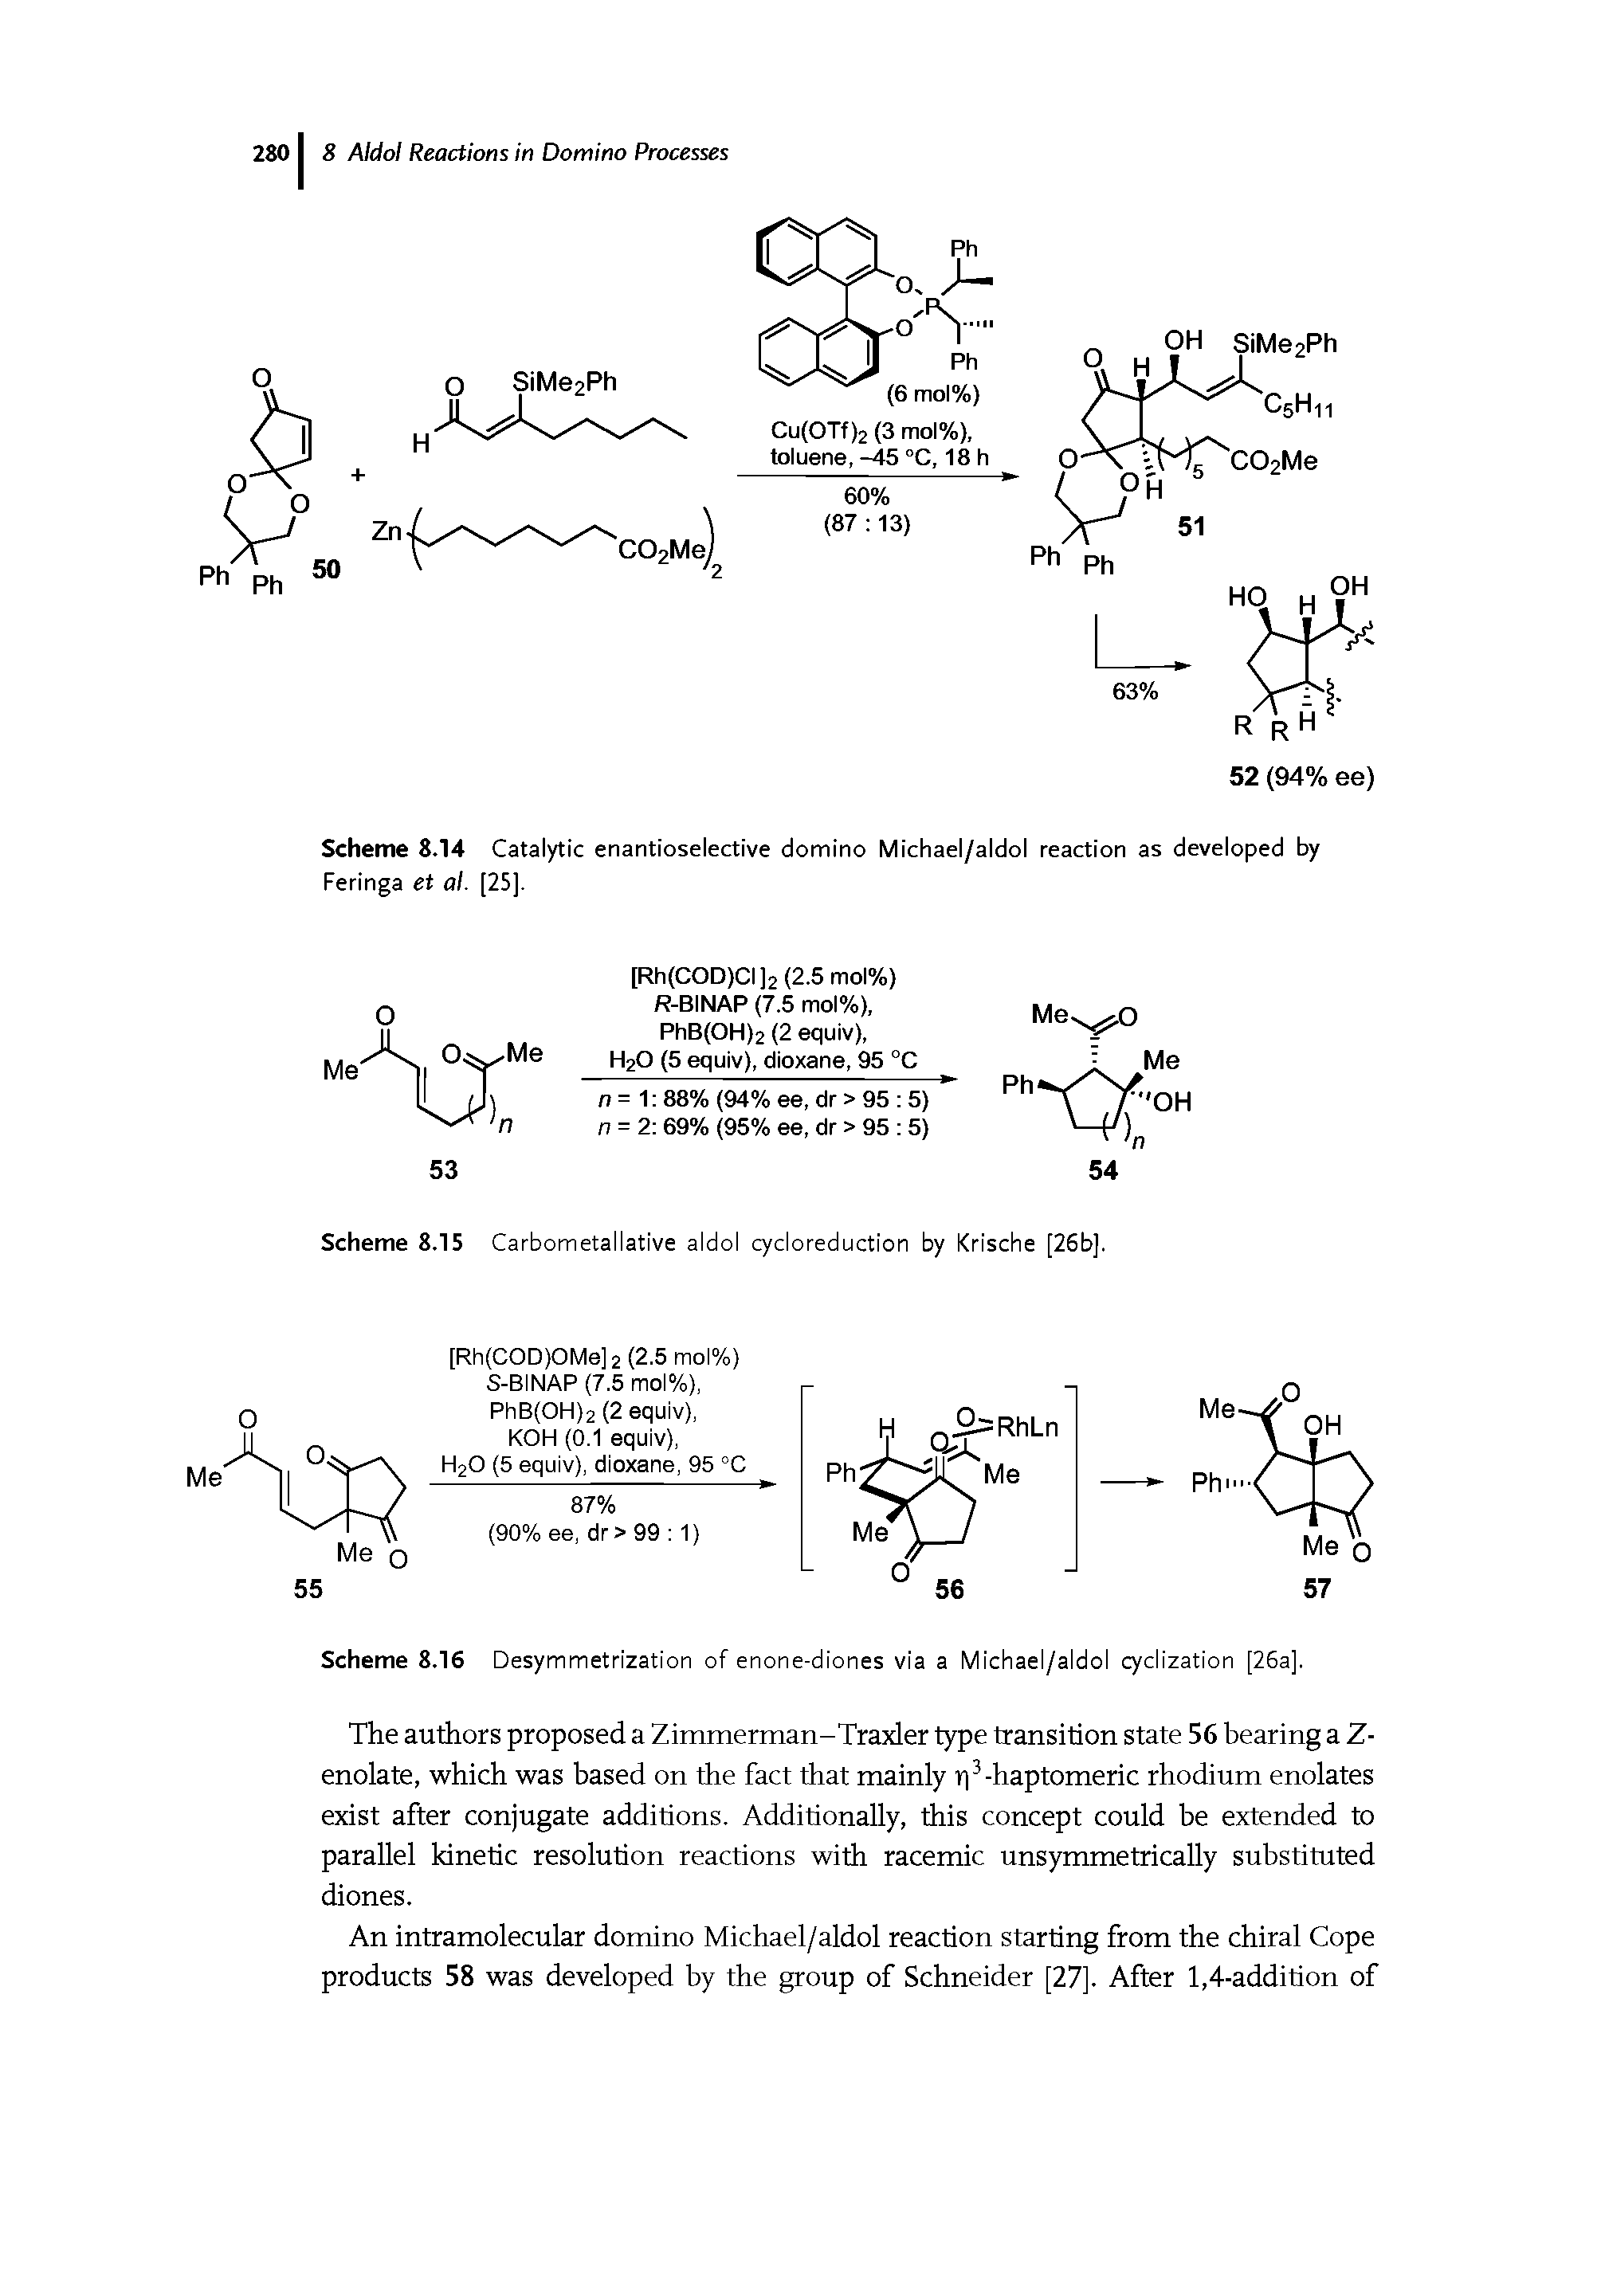 Scheme 8.16 Desymmetrization of enone-diones via a Michael/aldol cyclization [26aj.